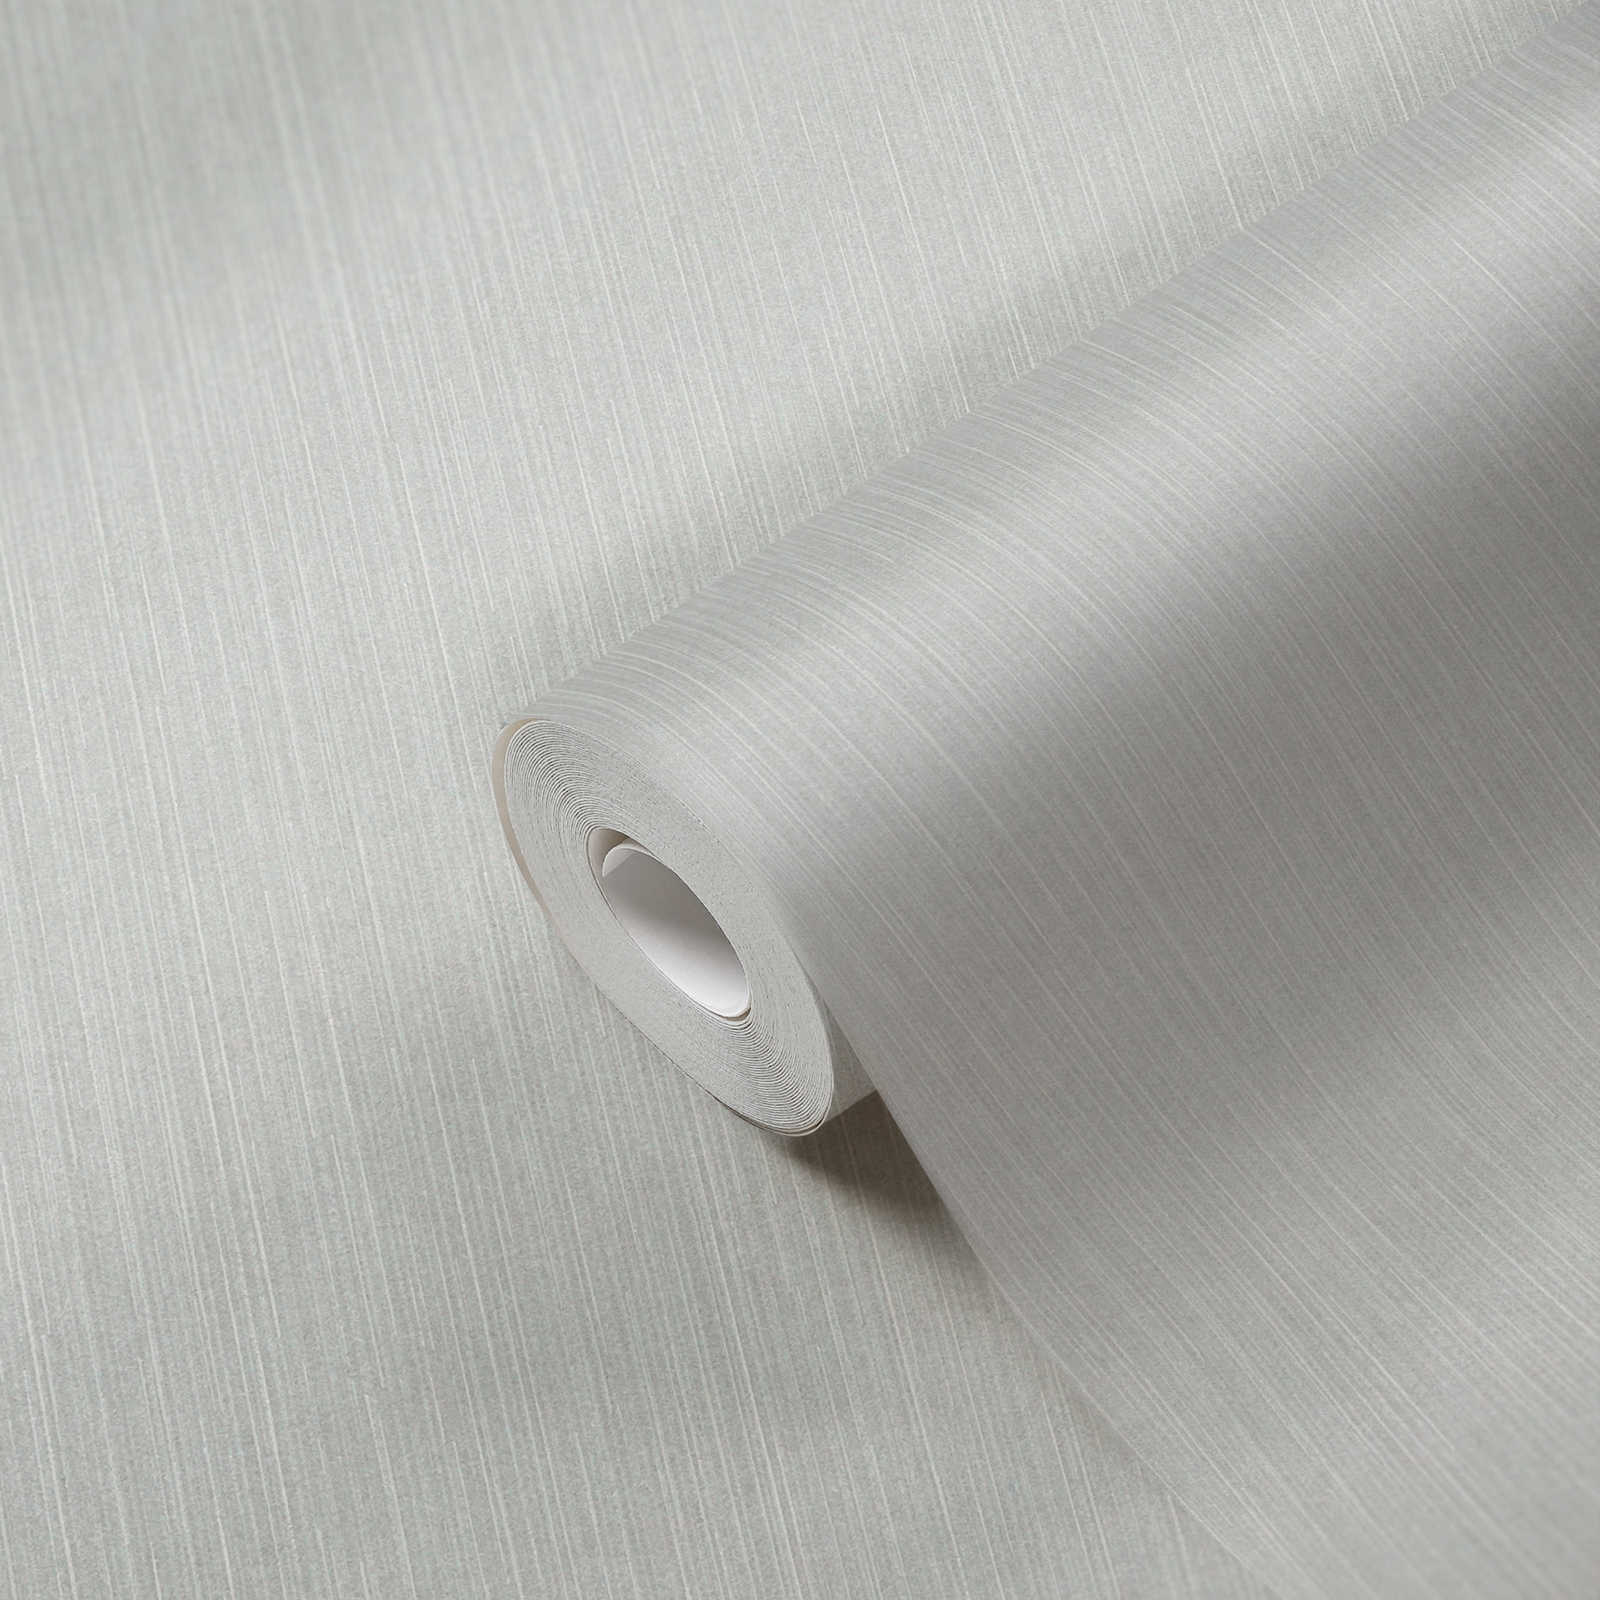             Linierte Tapete Silbergrau mit Glanzeffekt – Grau
        